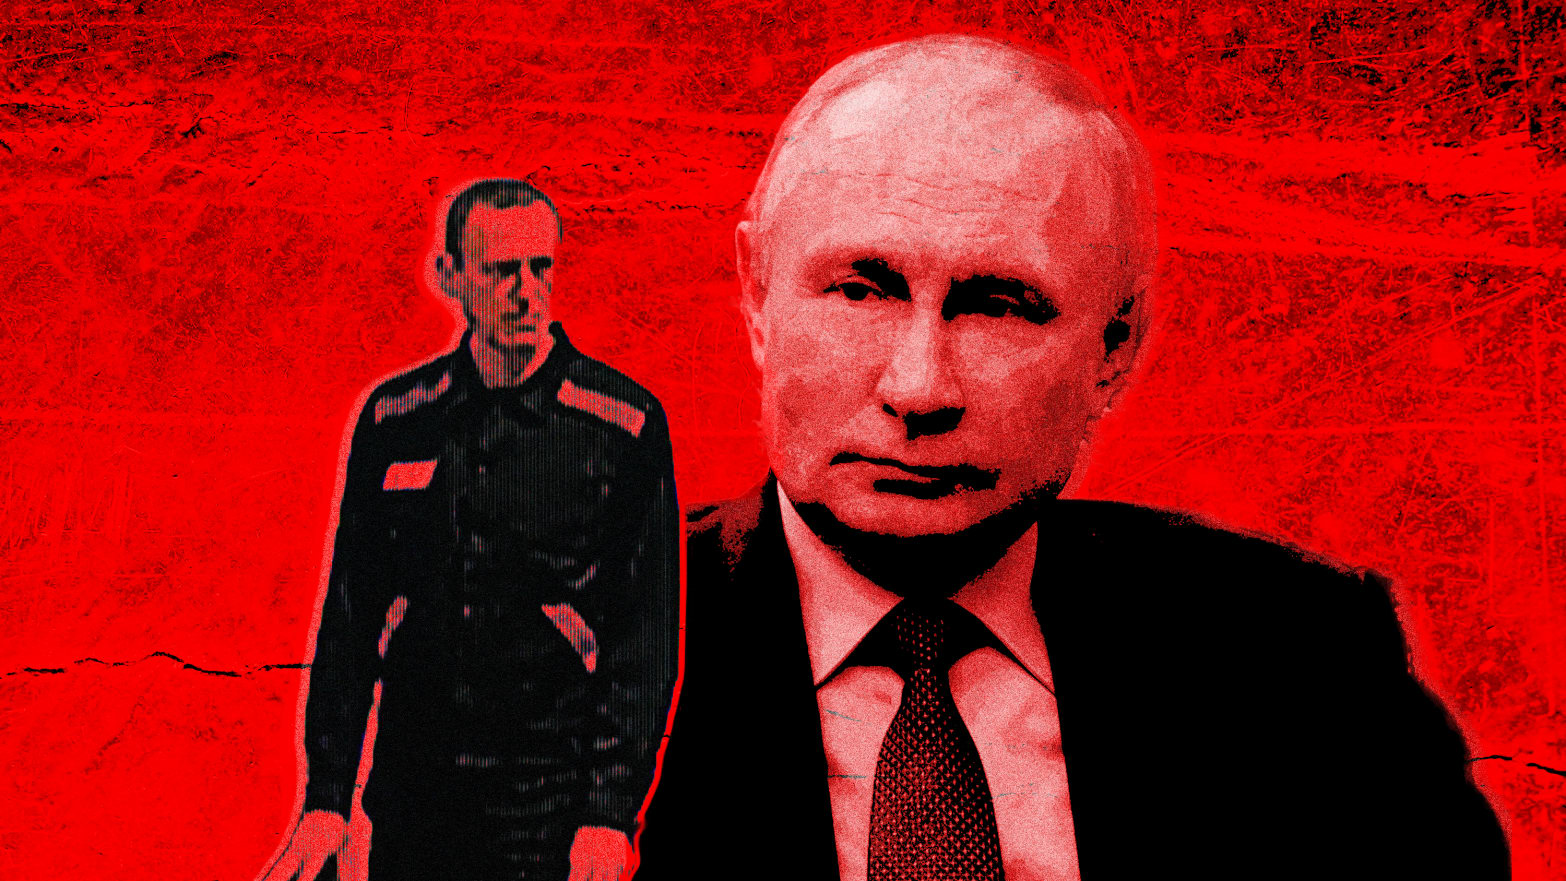 Putin's Twisted New Torment for Alexei Navalny His Political Nemesis